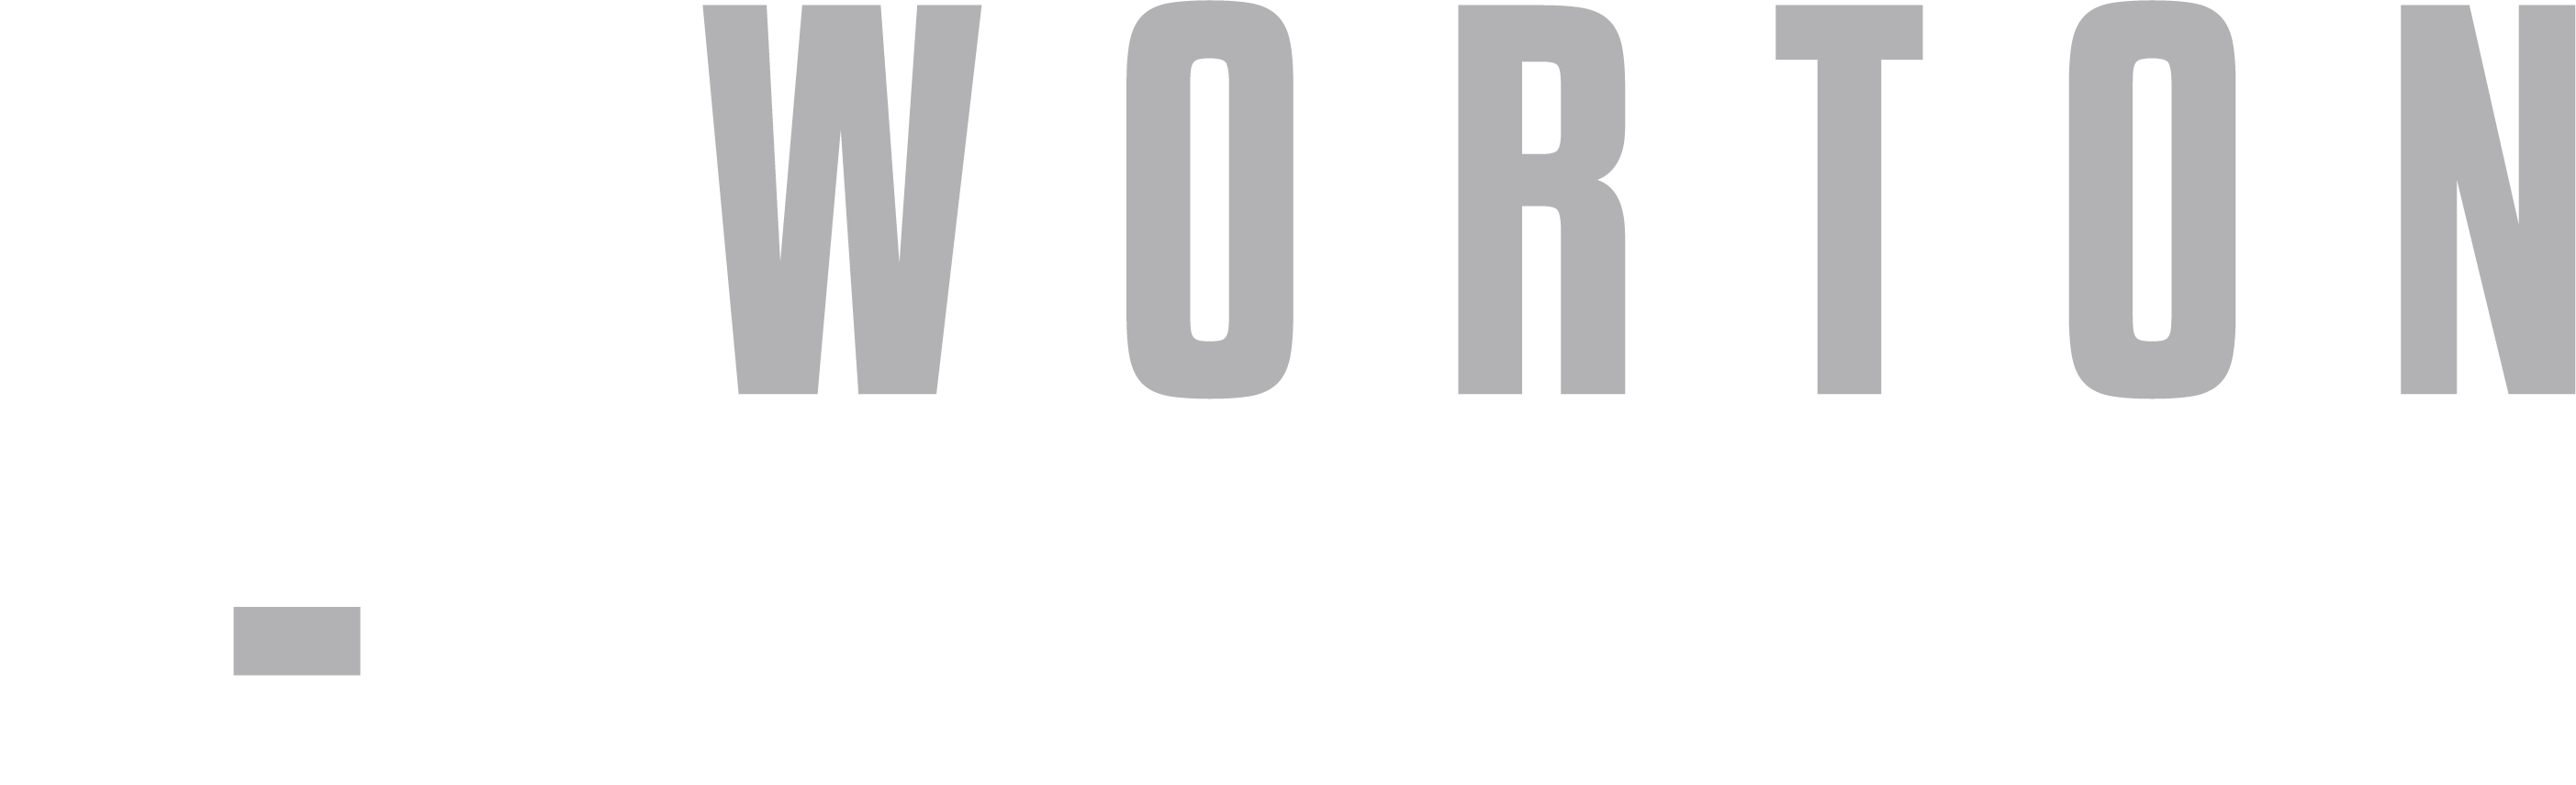 Worton Homes